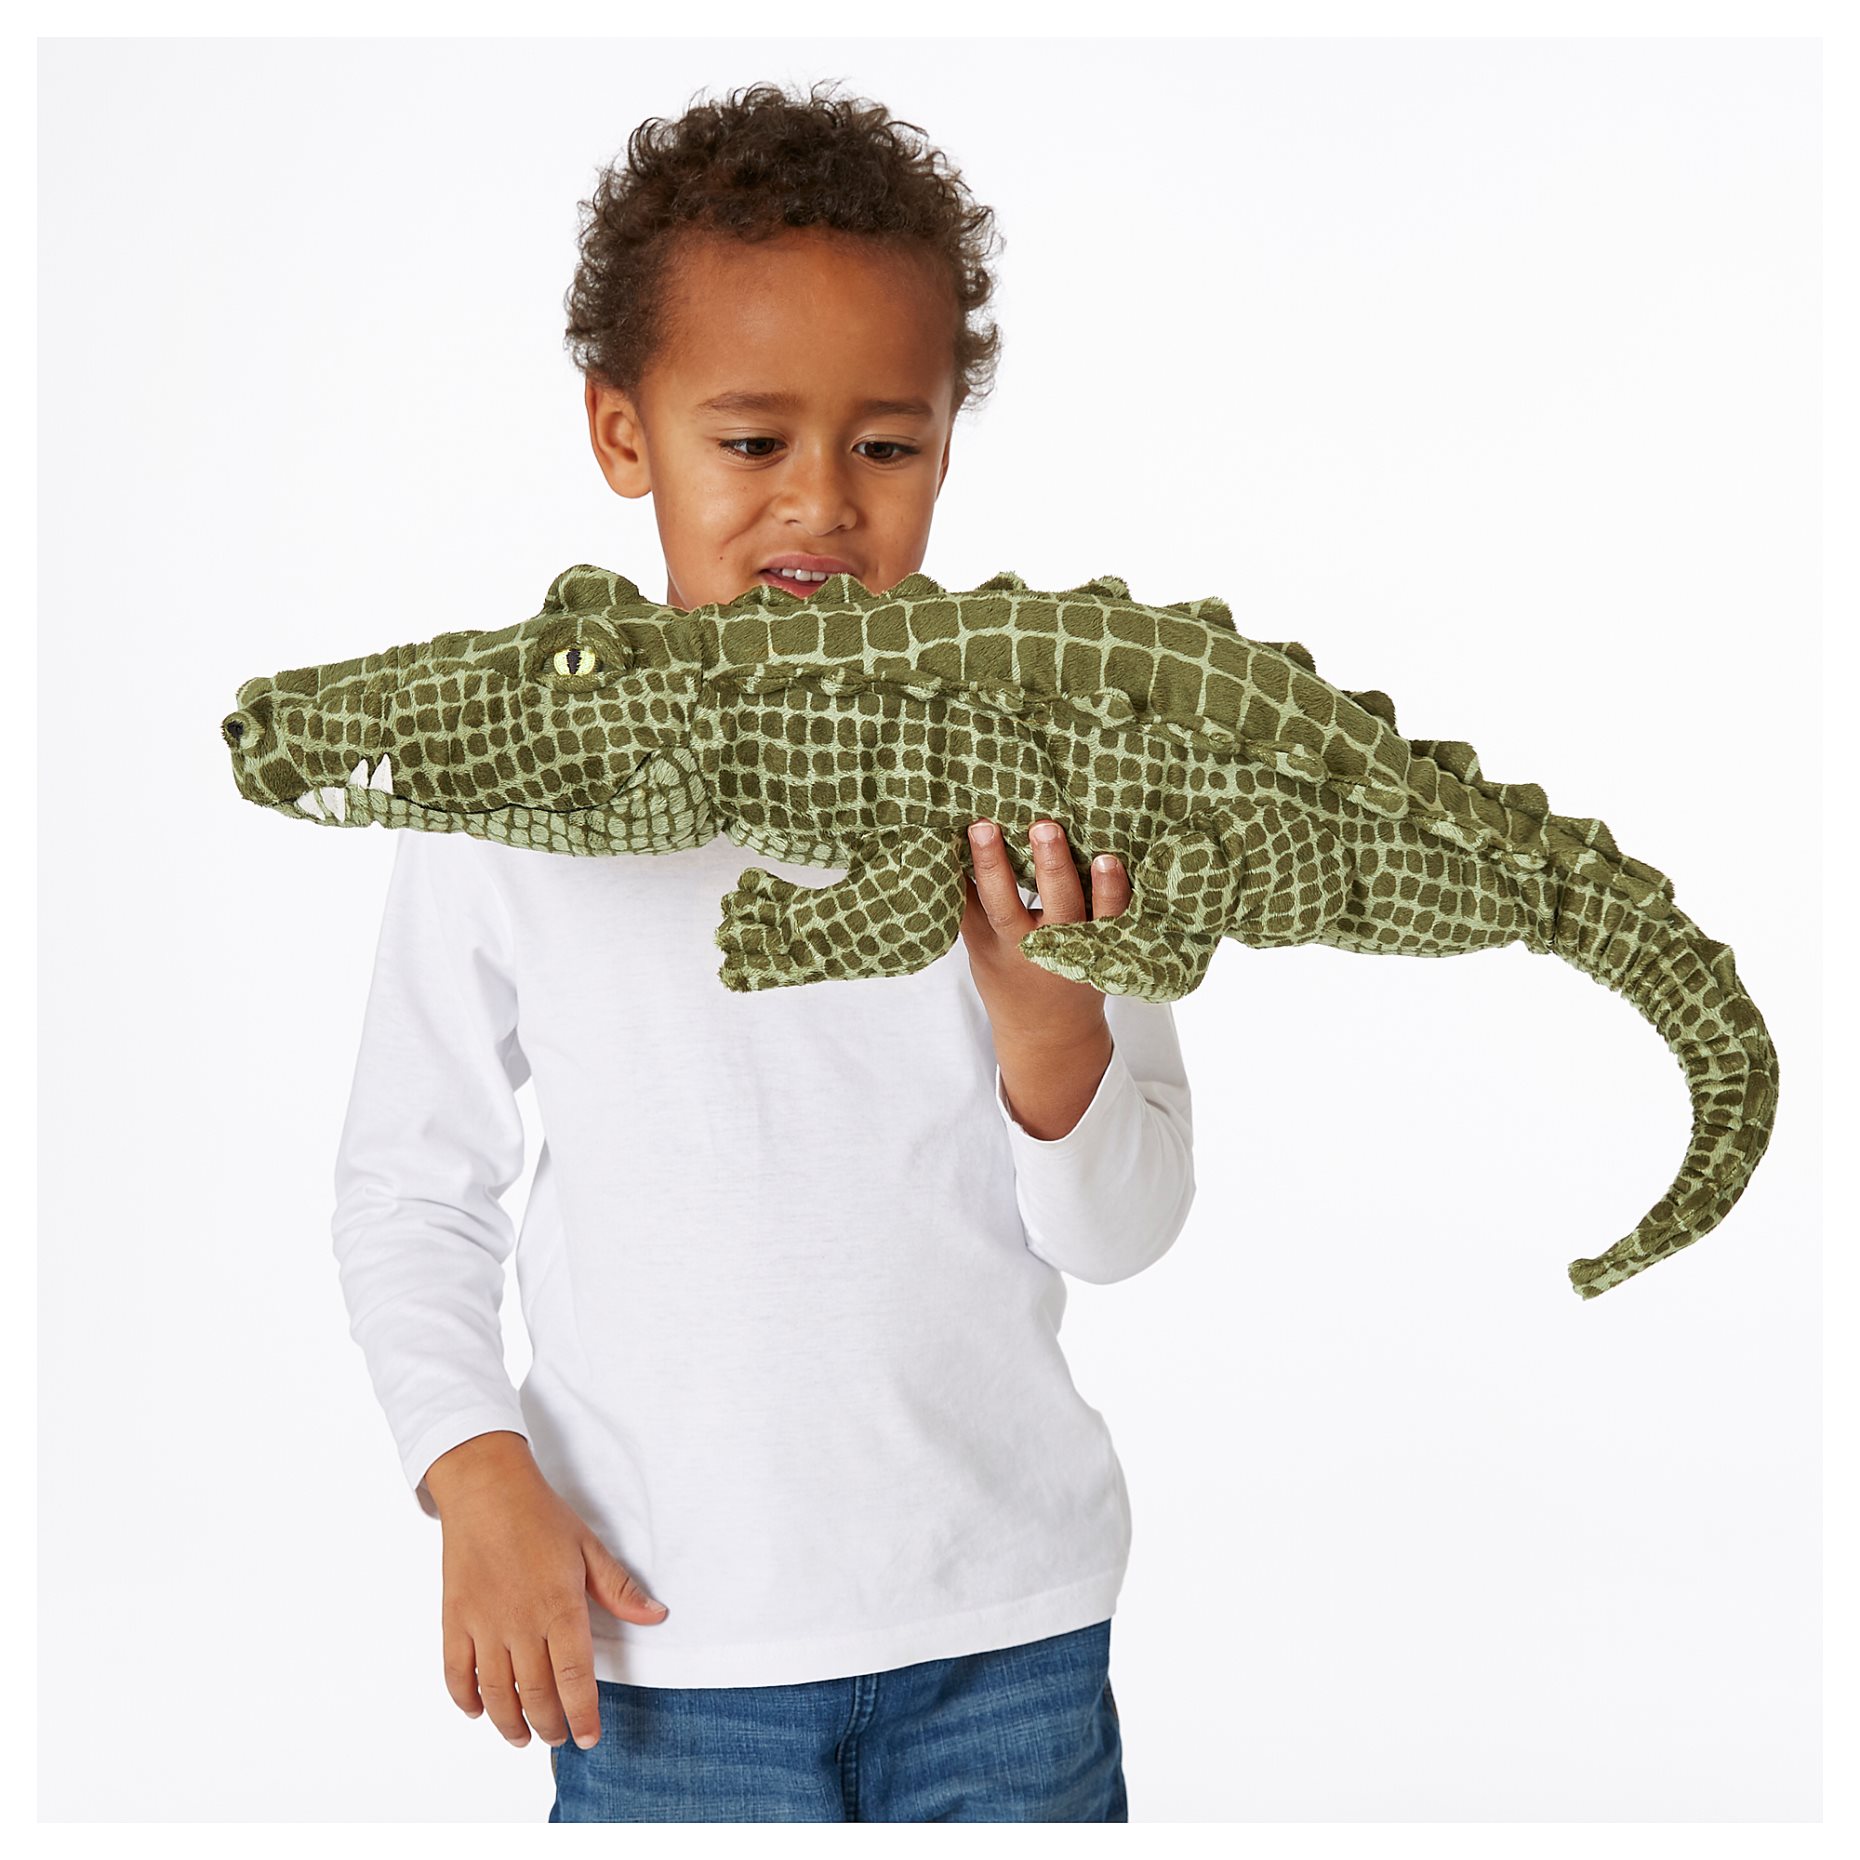 JÄTTEMÄTT, soft toy/crocodile, 80 cm, 505.068.13